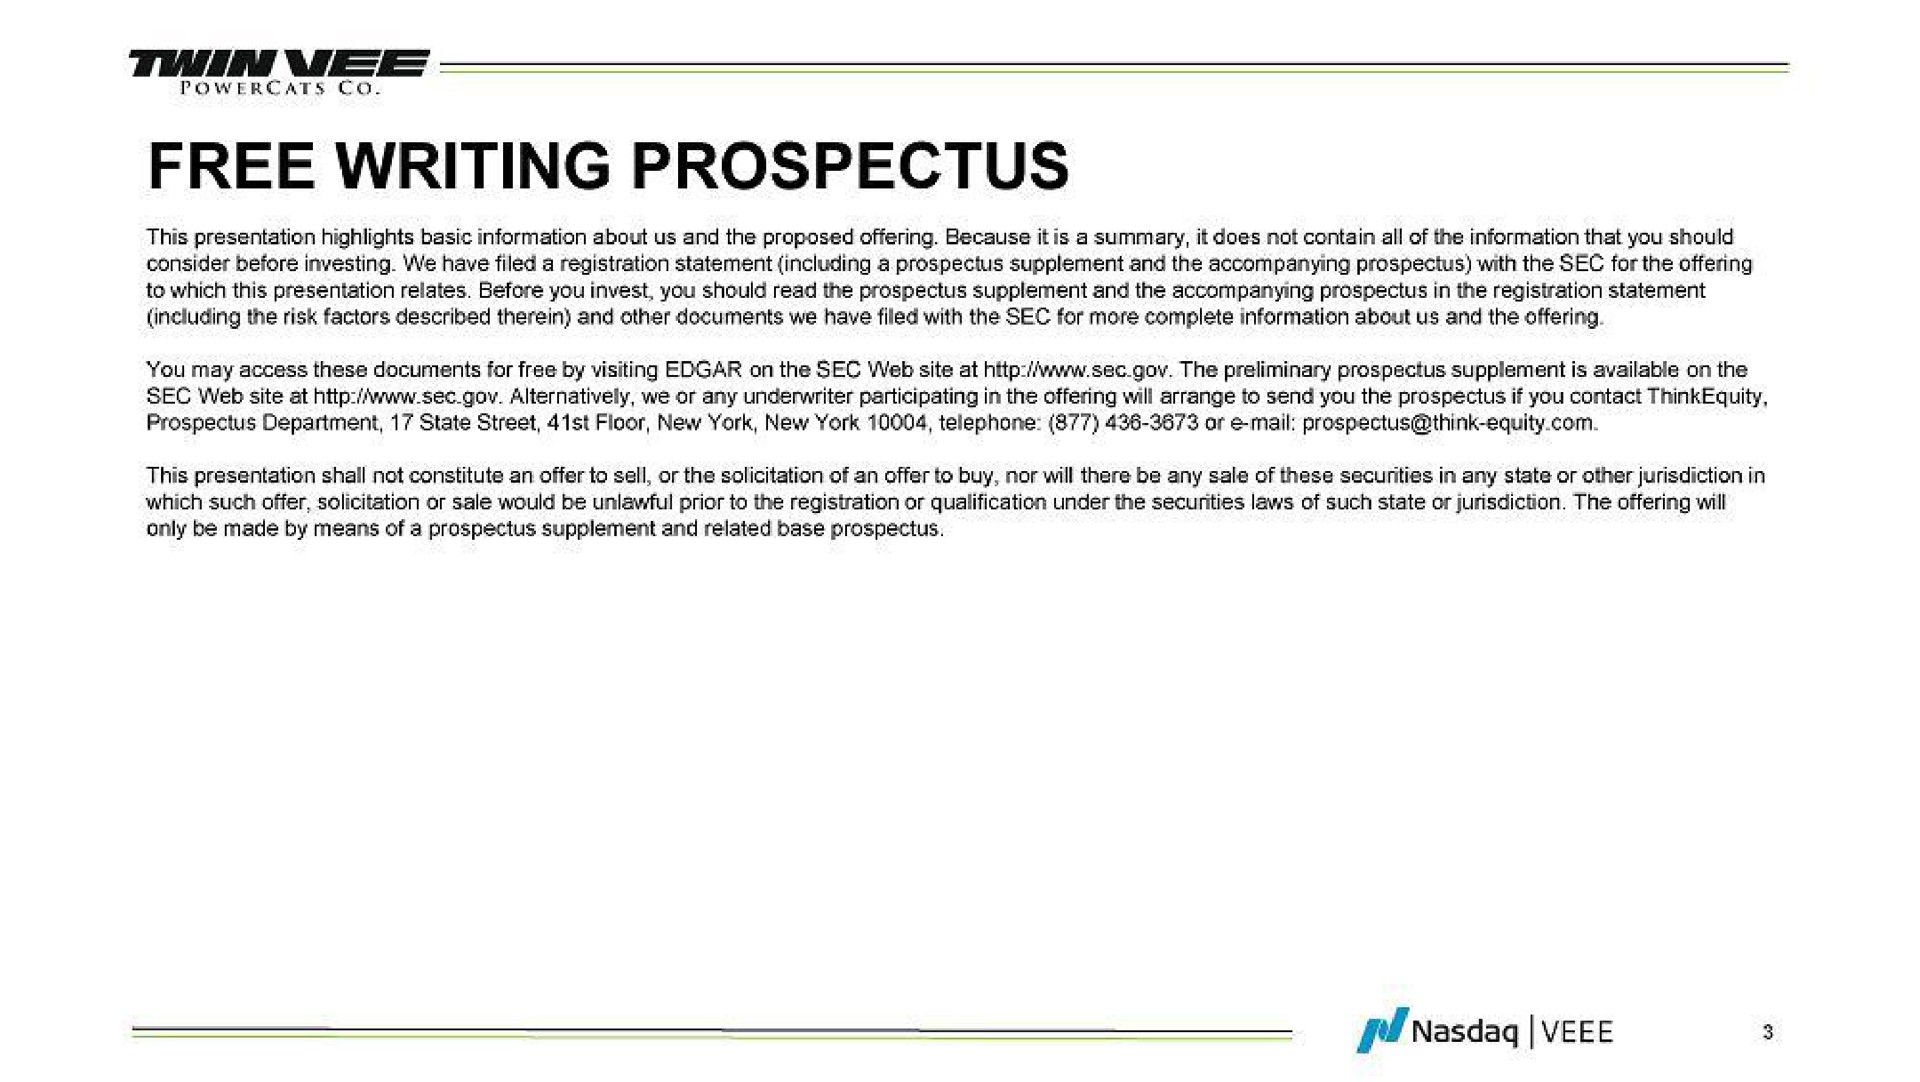 free writing prospectus | Twin Vee PowerCats